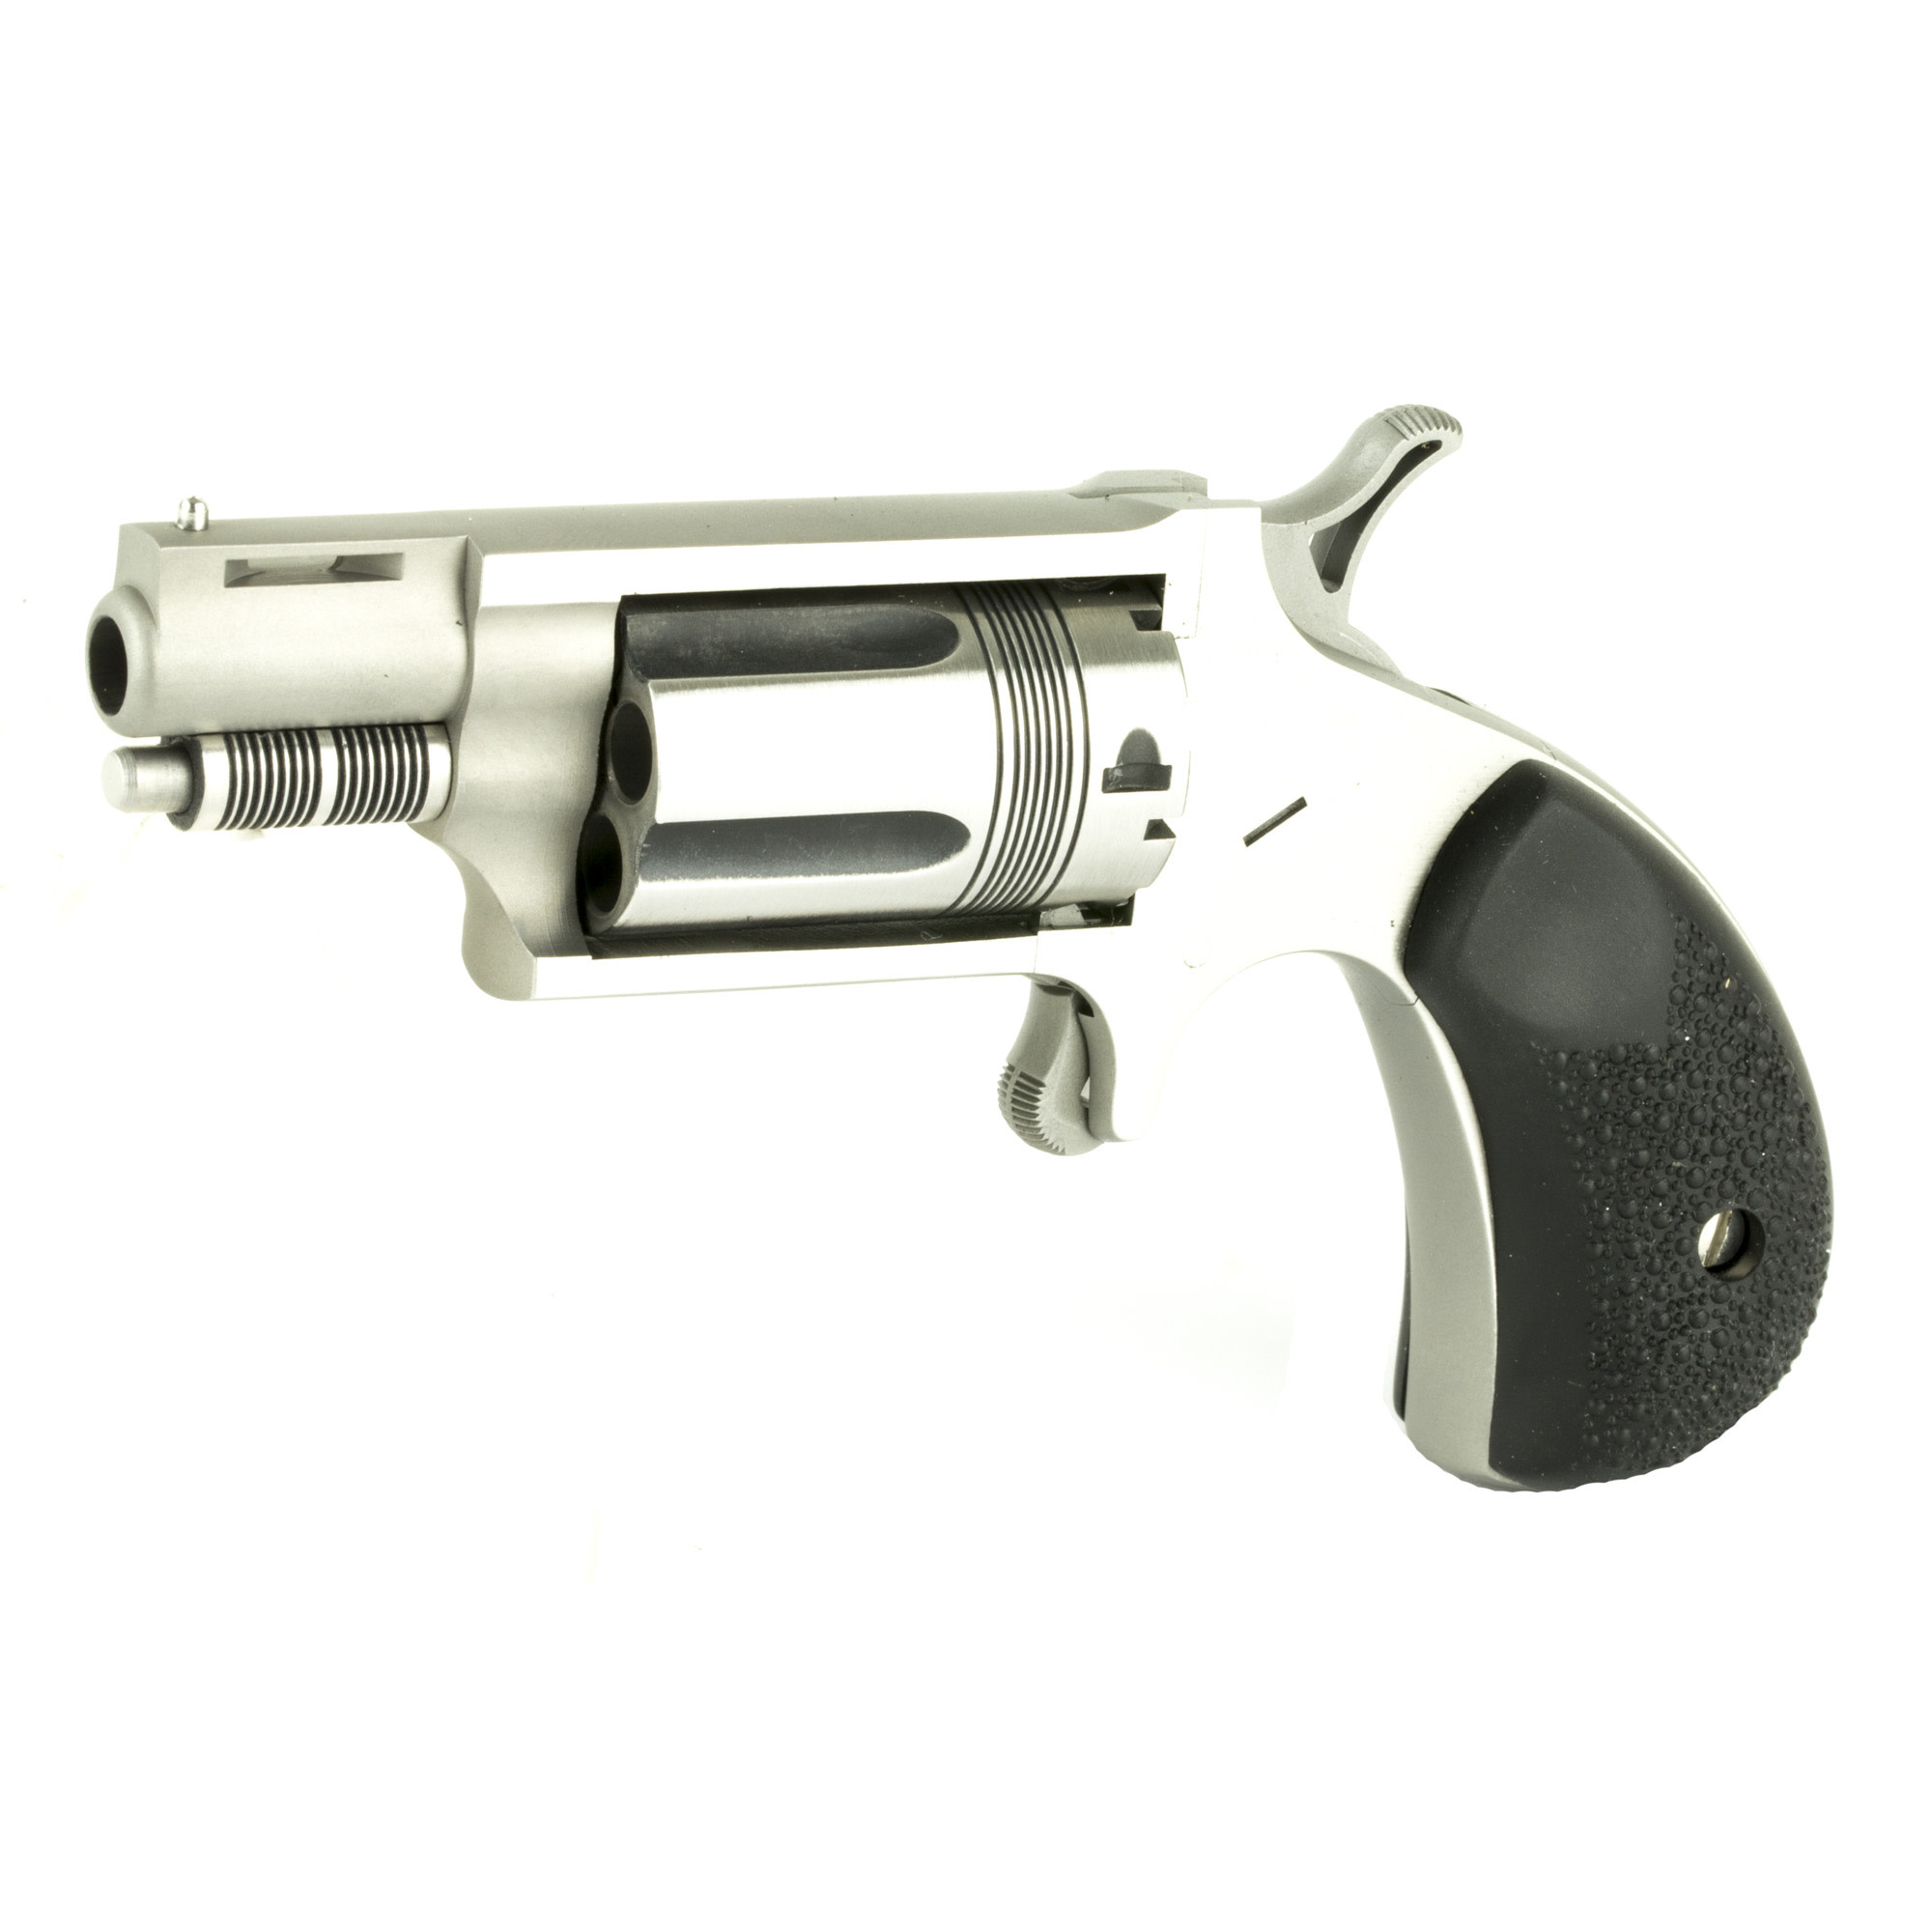 North American Arms, The Wasp Snub 22LR/22 WMR, 1.125" BLK/SS 5RD Revolver